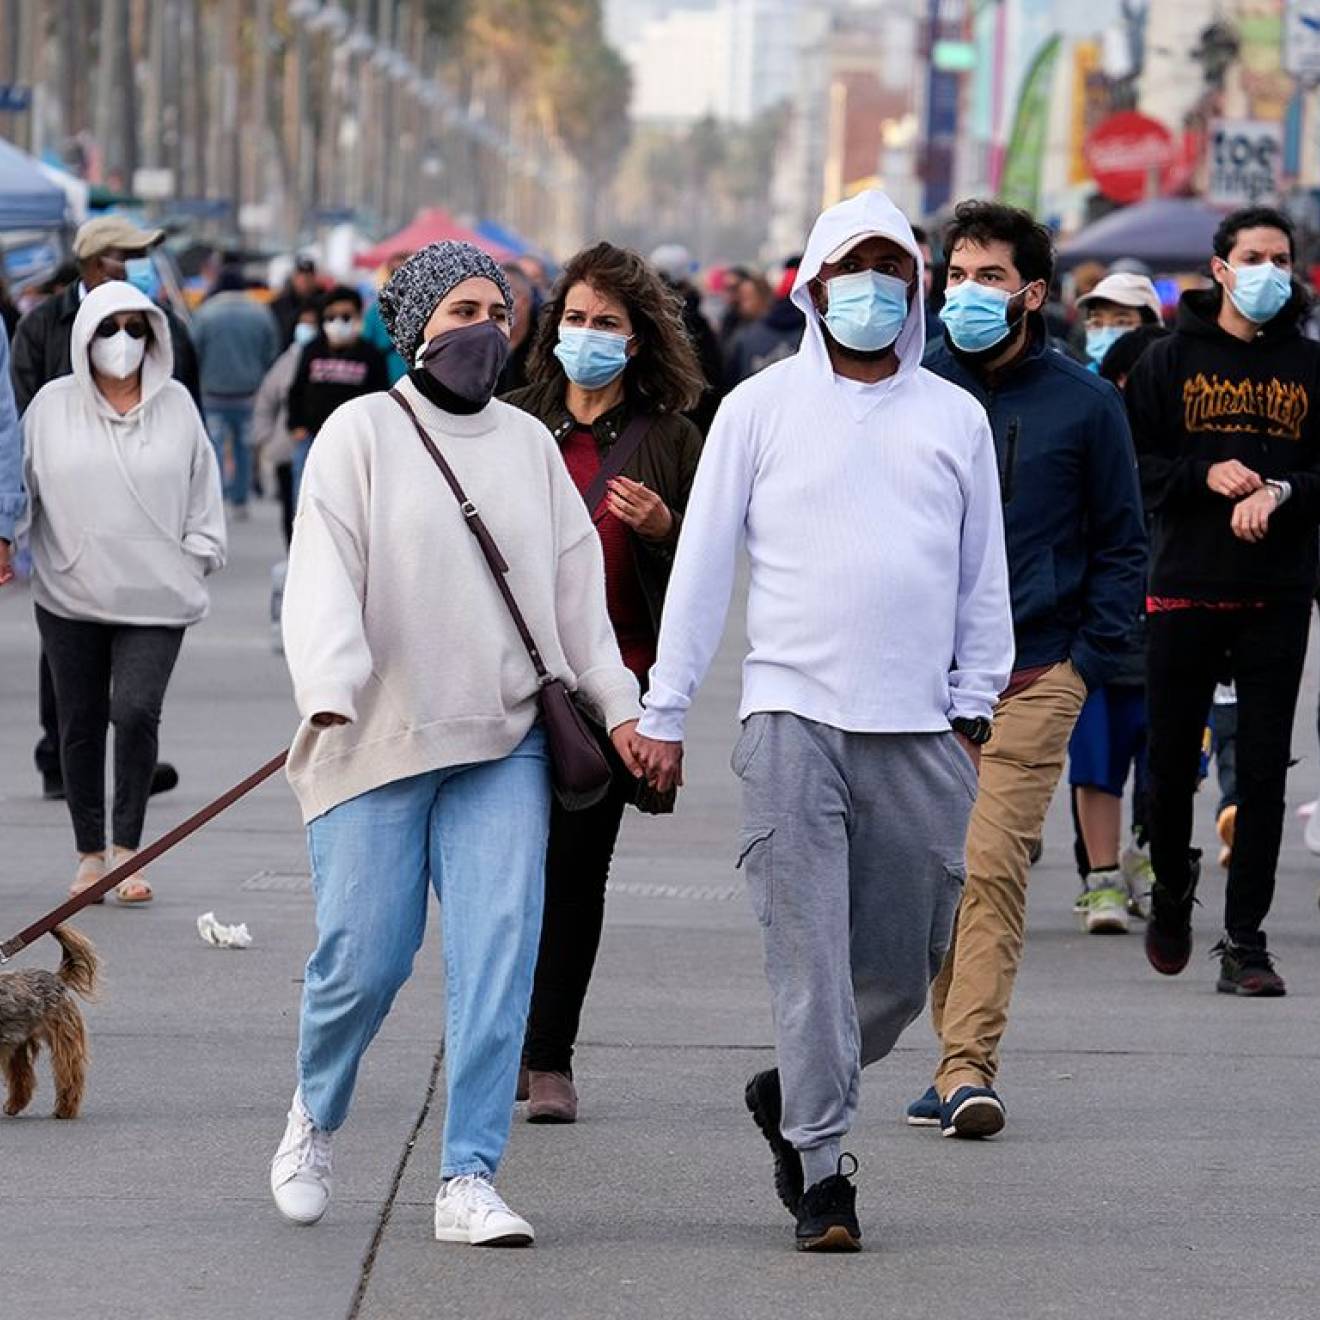 Group of people walking outside wearing masks